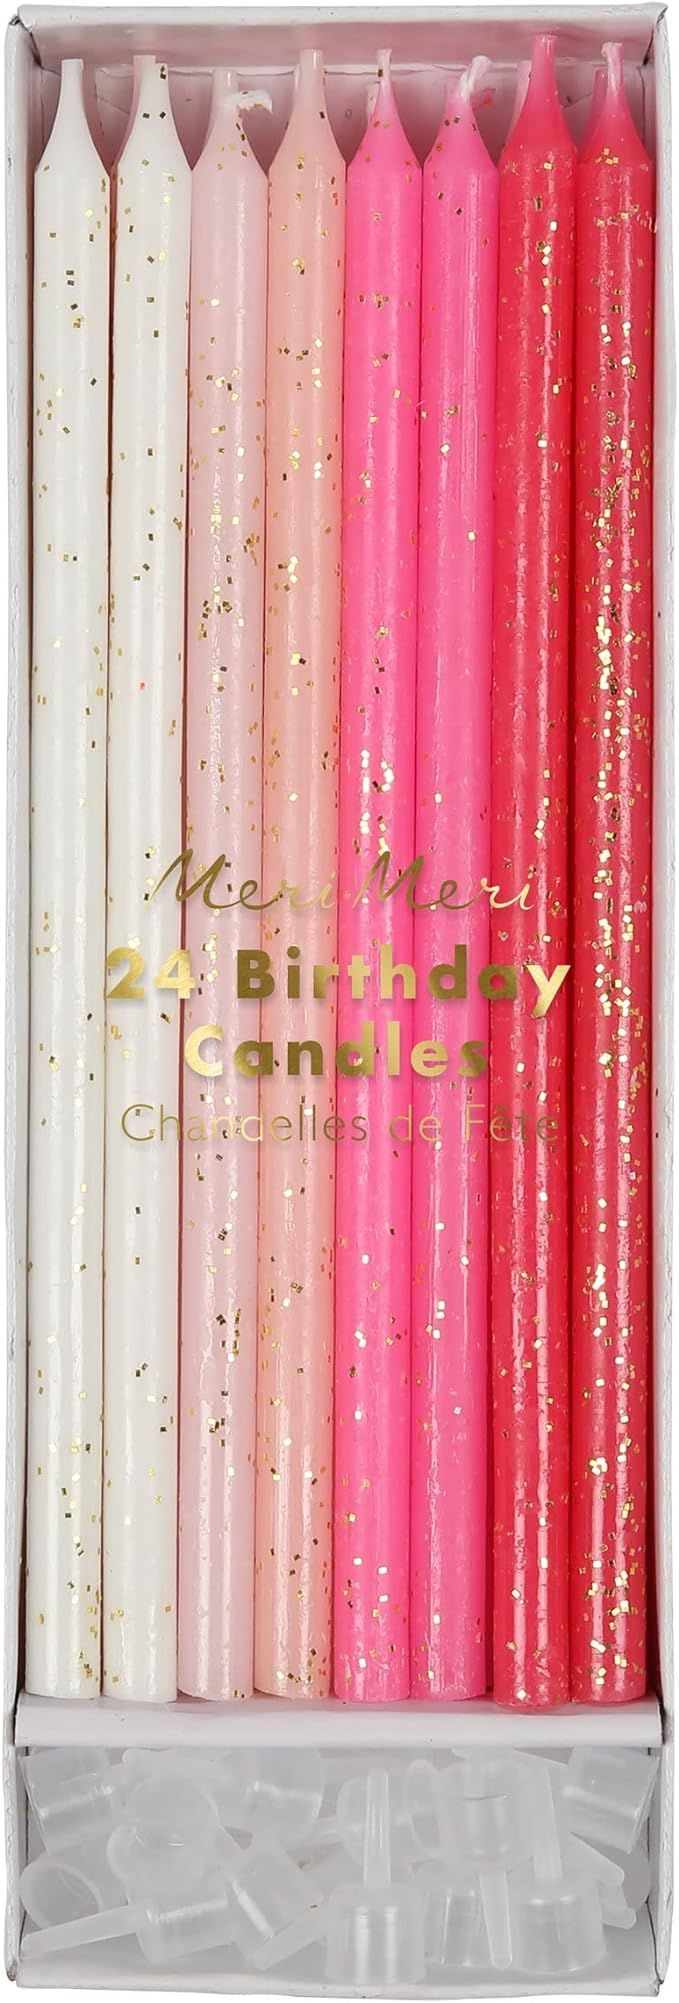 Meri Meri Pink Glitter Candles (Pack of 24) | Amazon (US)